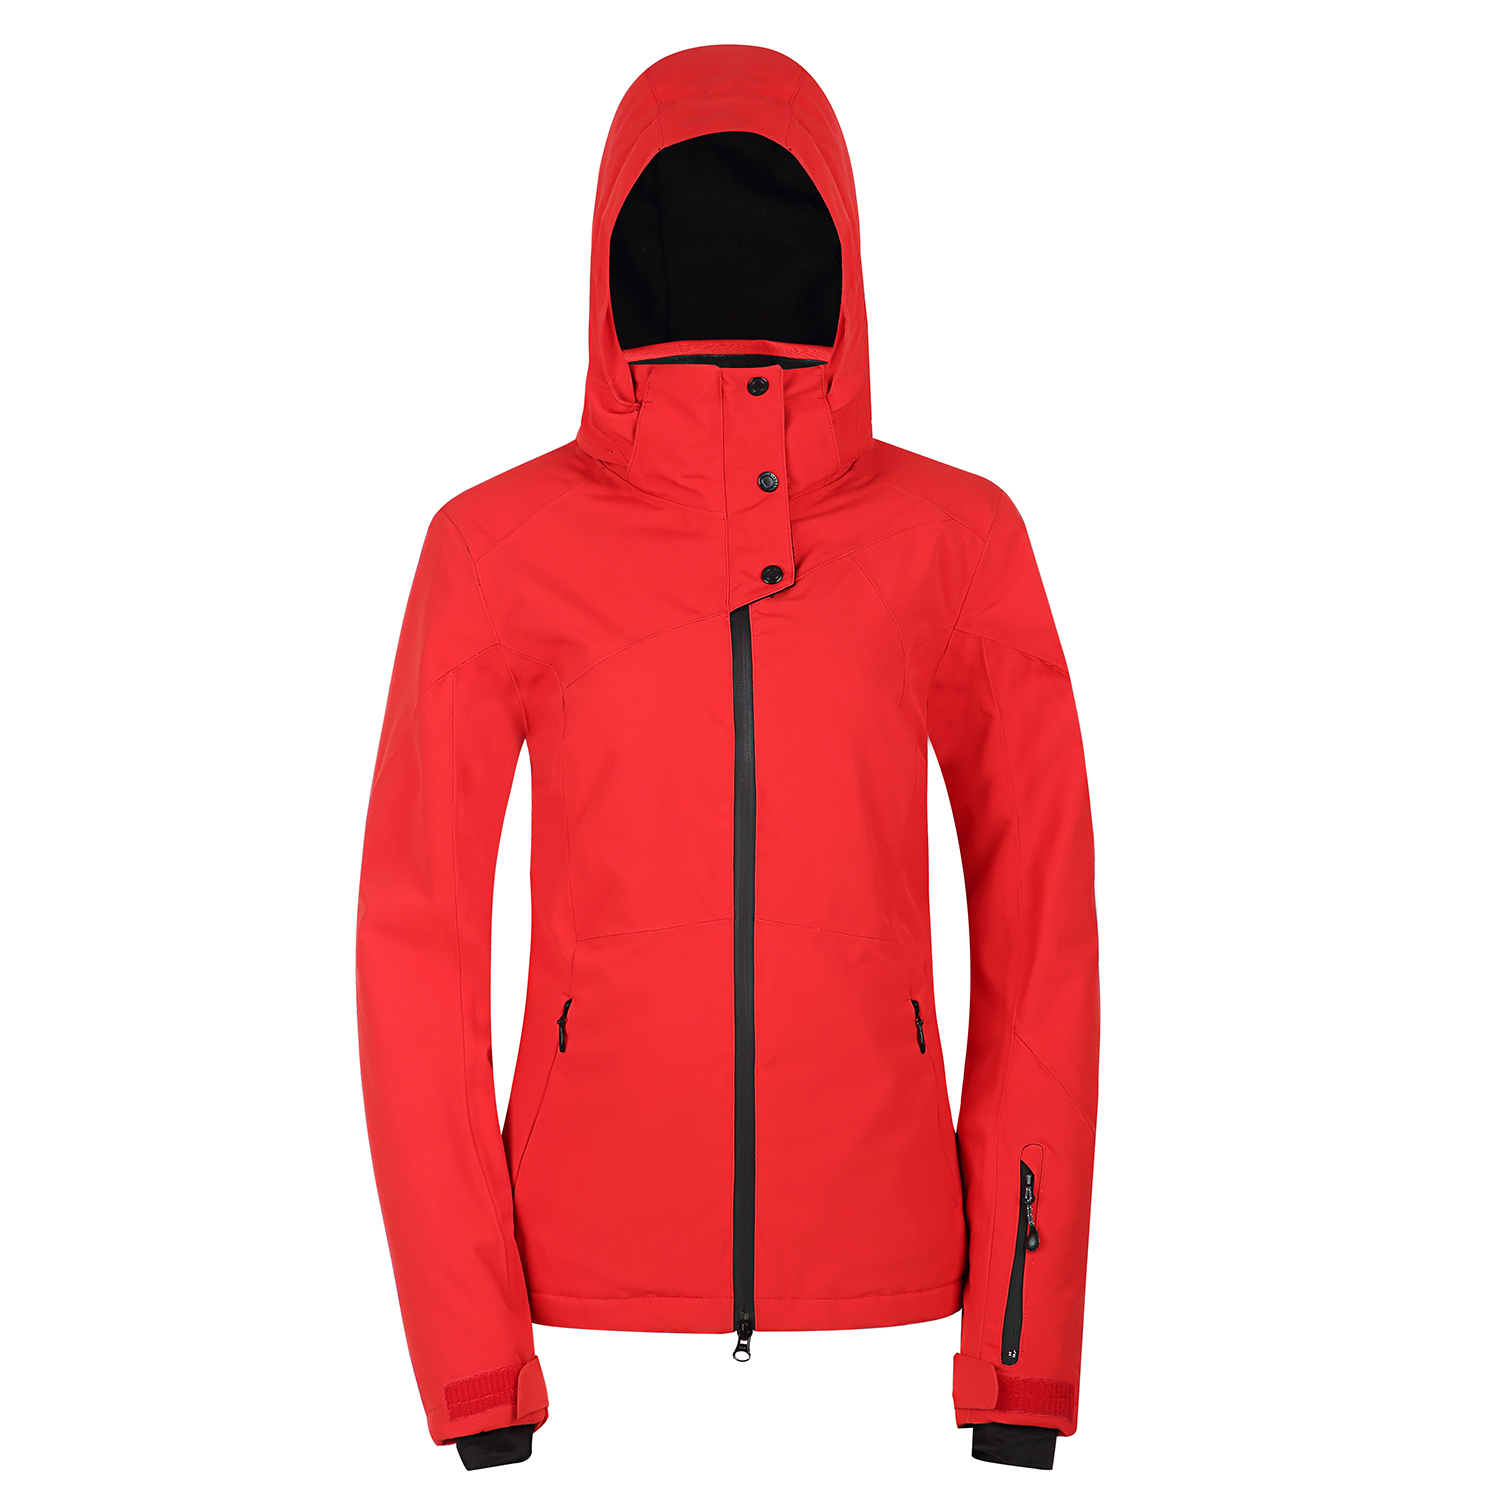 Fashion Ski Jacket with snow locker and waterproof zipper